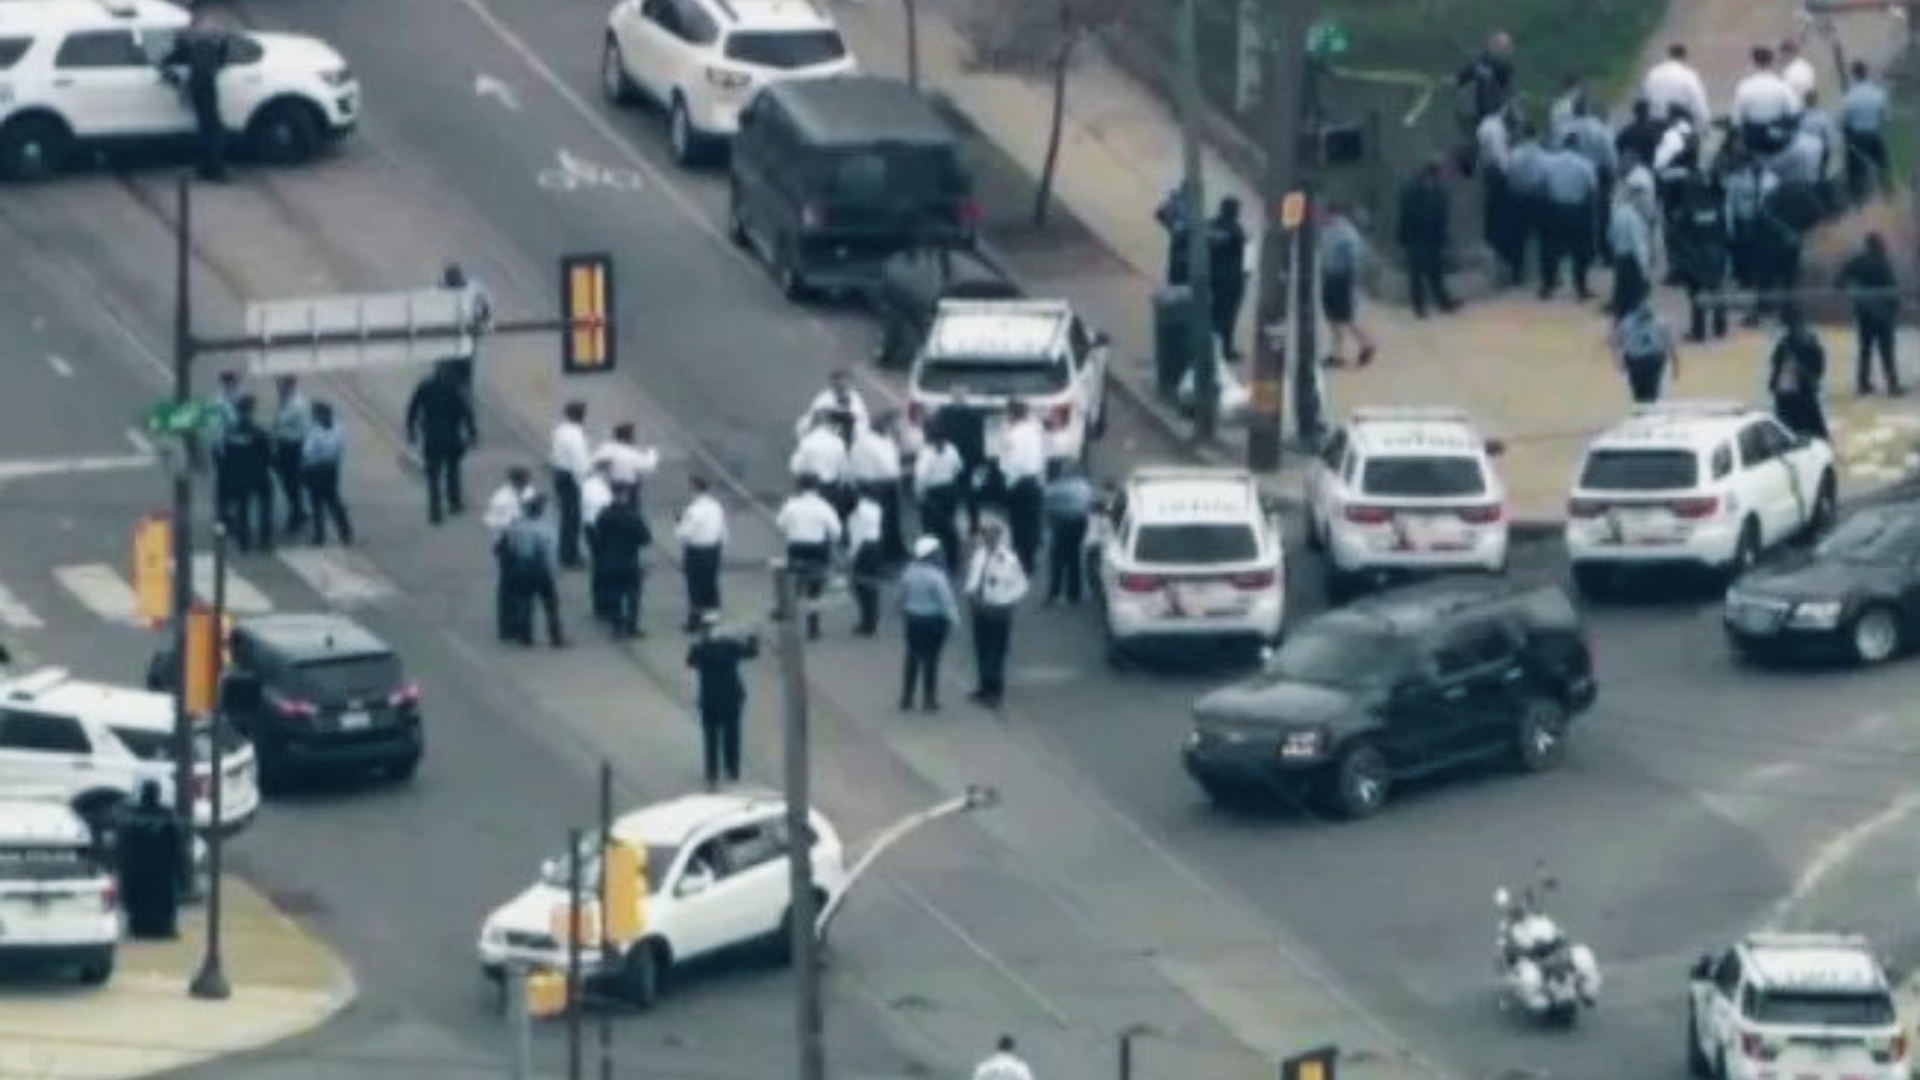 Philadelphia: Ramadan Celebration Goes Horribly Wrong As 3 Get Injured During Shootout, 5 Arrested